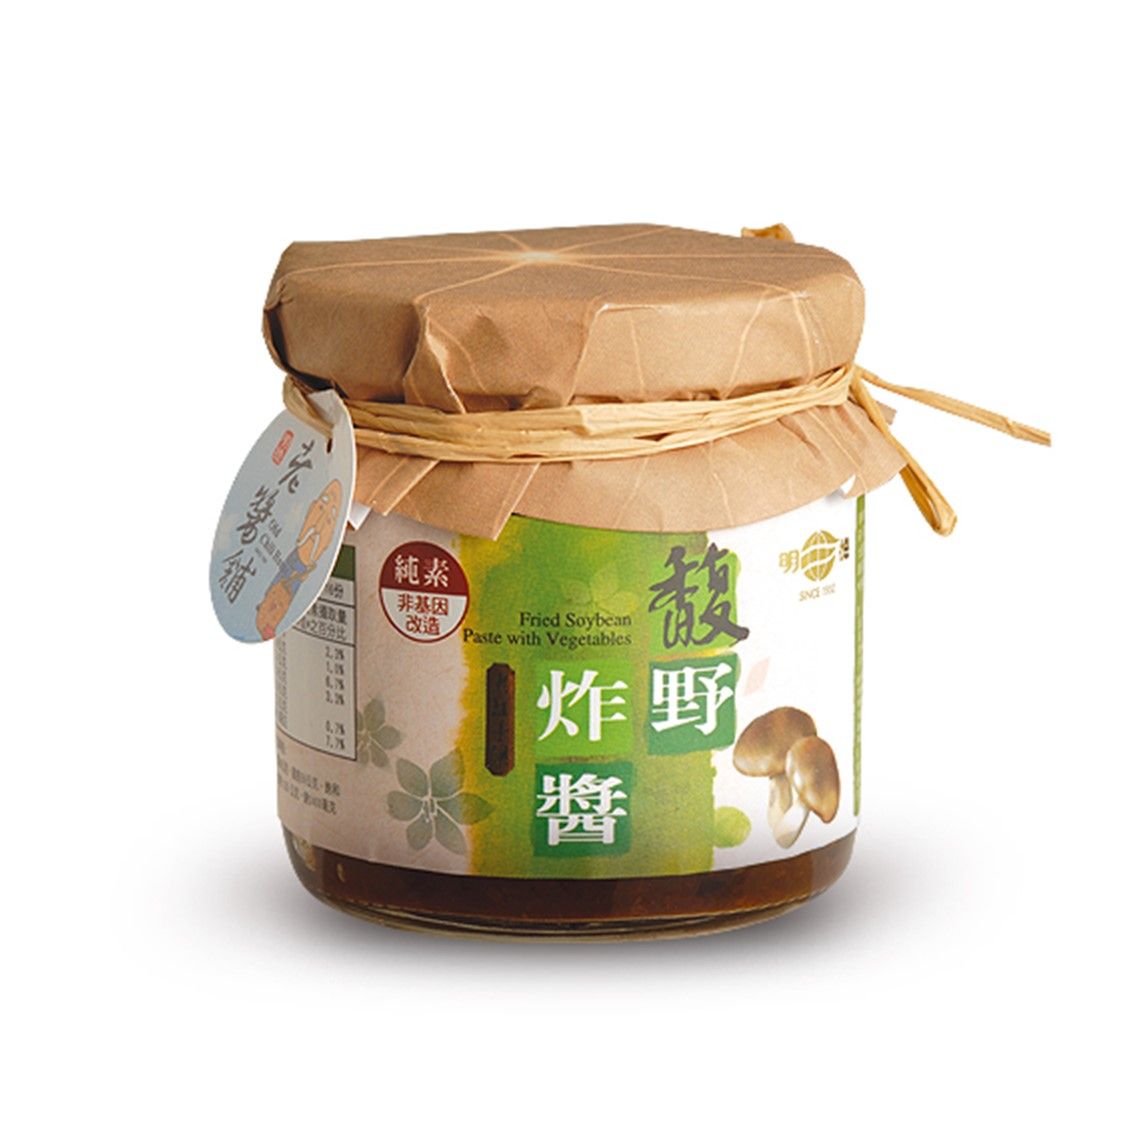 #5886 馥野炸醬 Fried Soybean Paste with Mushroom (明德) 160g, 72/cs